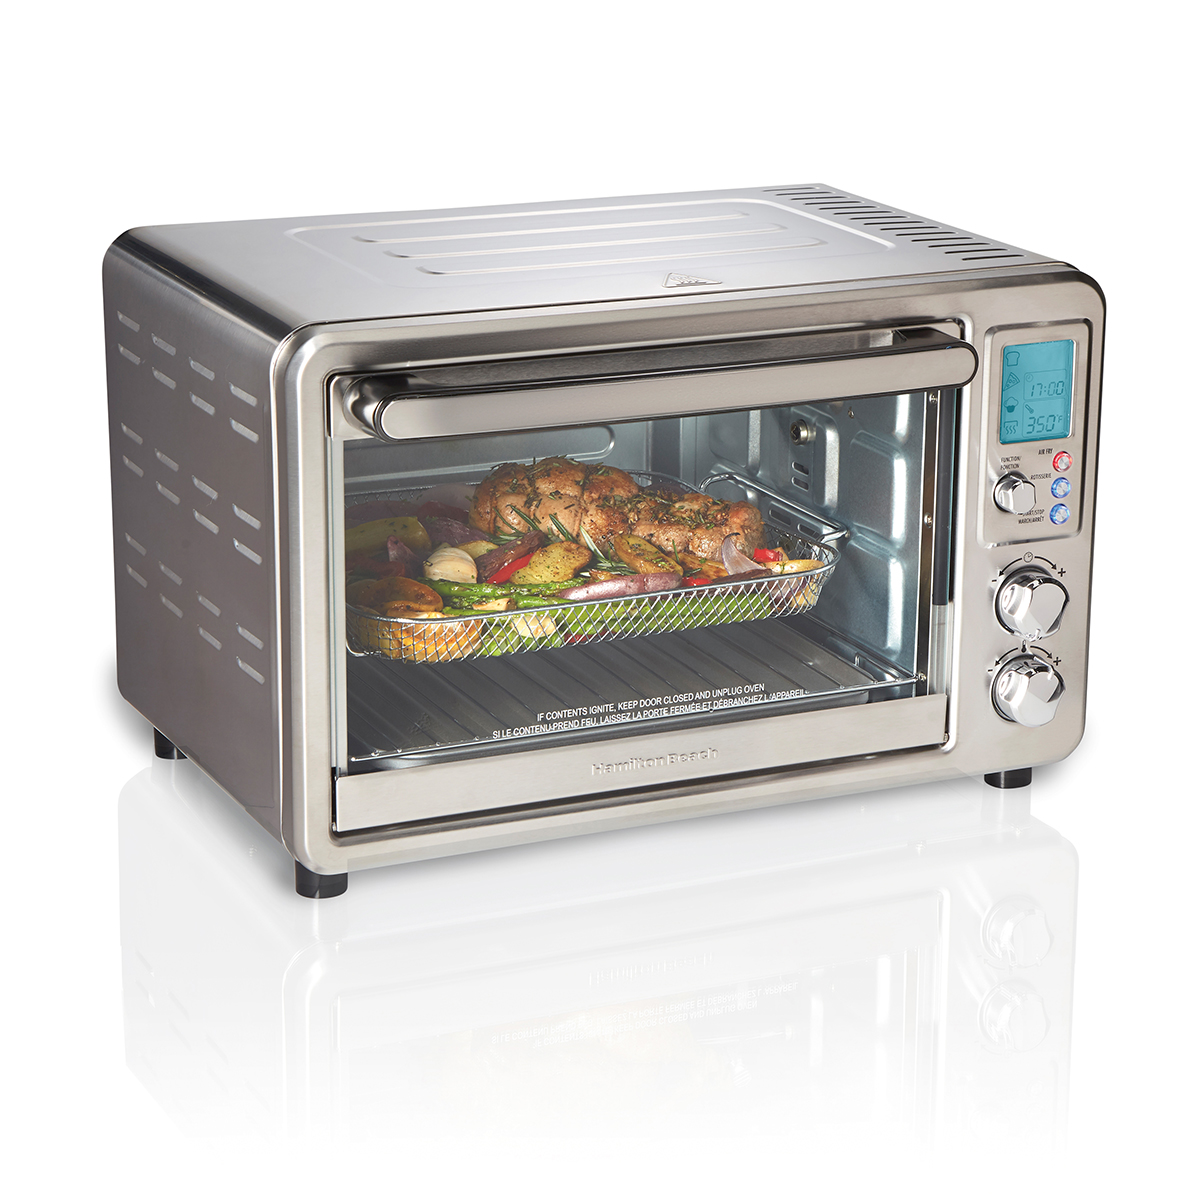 Recertified Sure-Crisp® Digital Air Fryer Toaster Oven with Rotisserie (R31193)